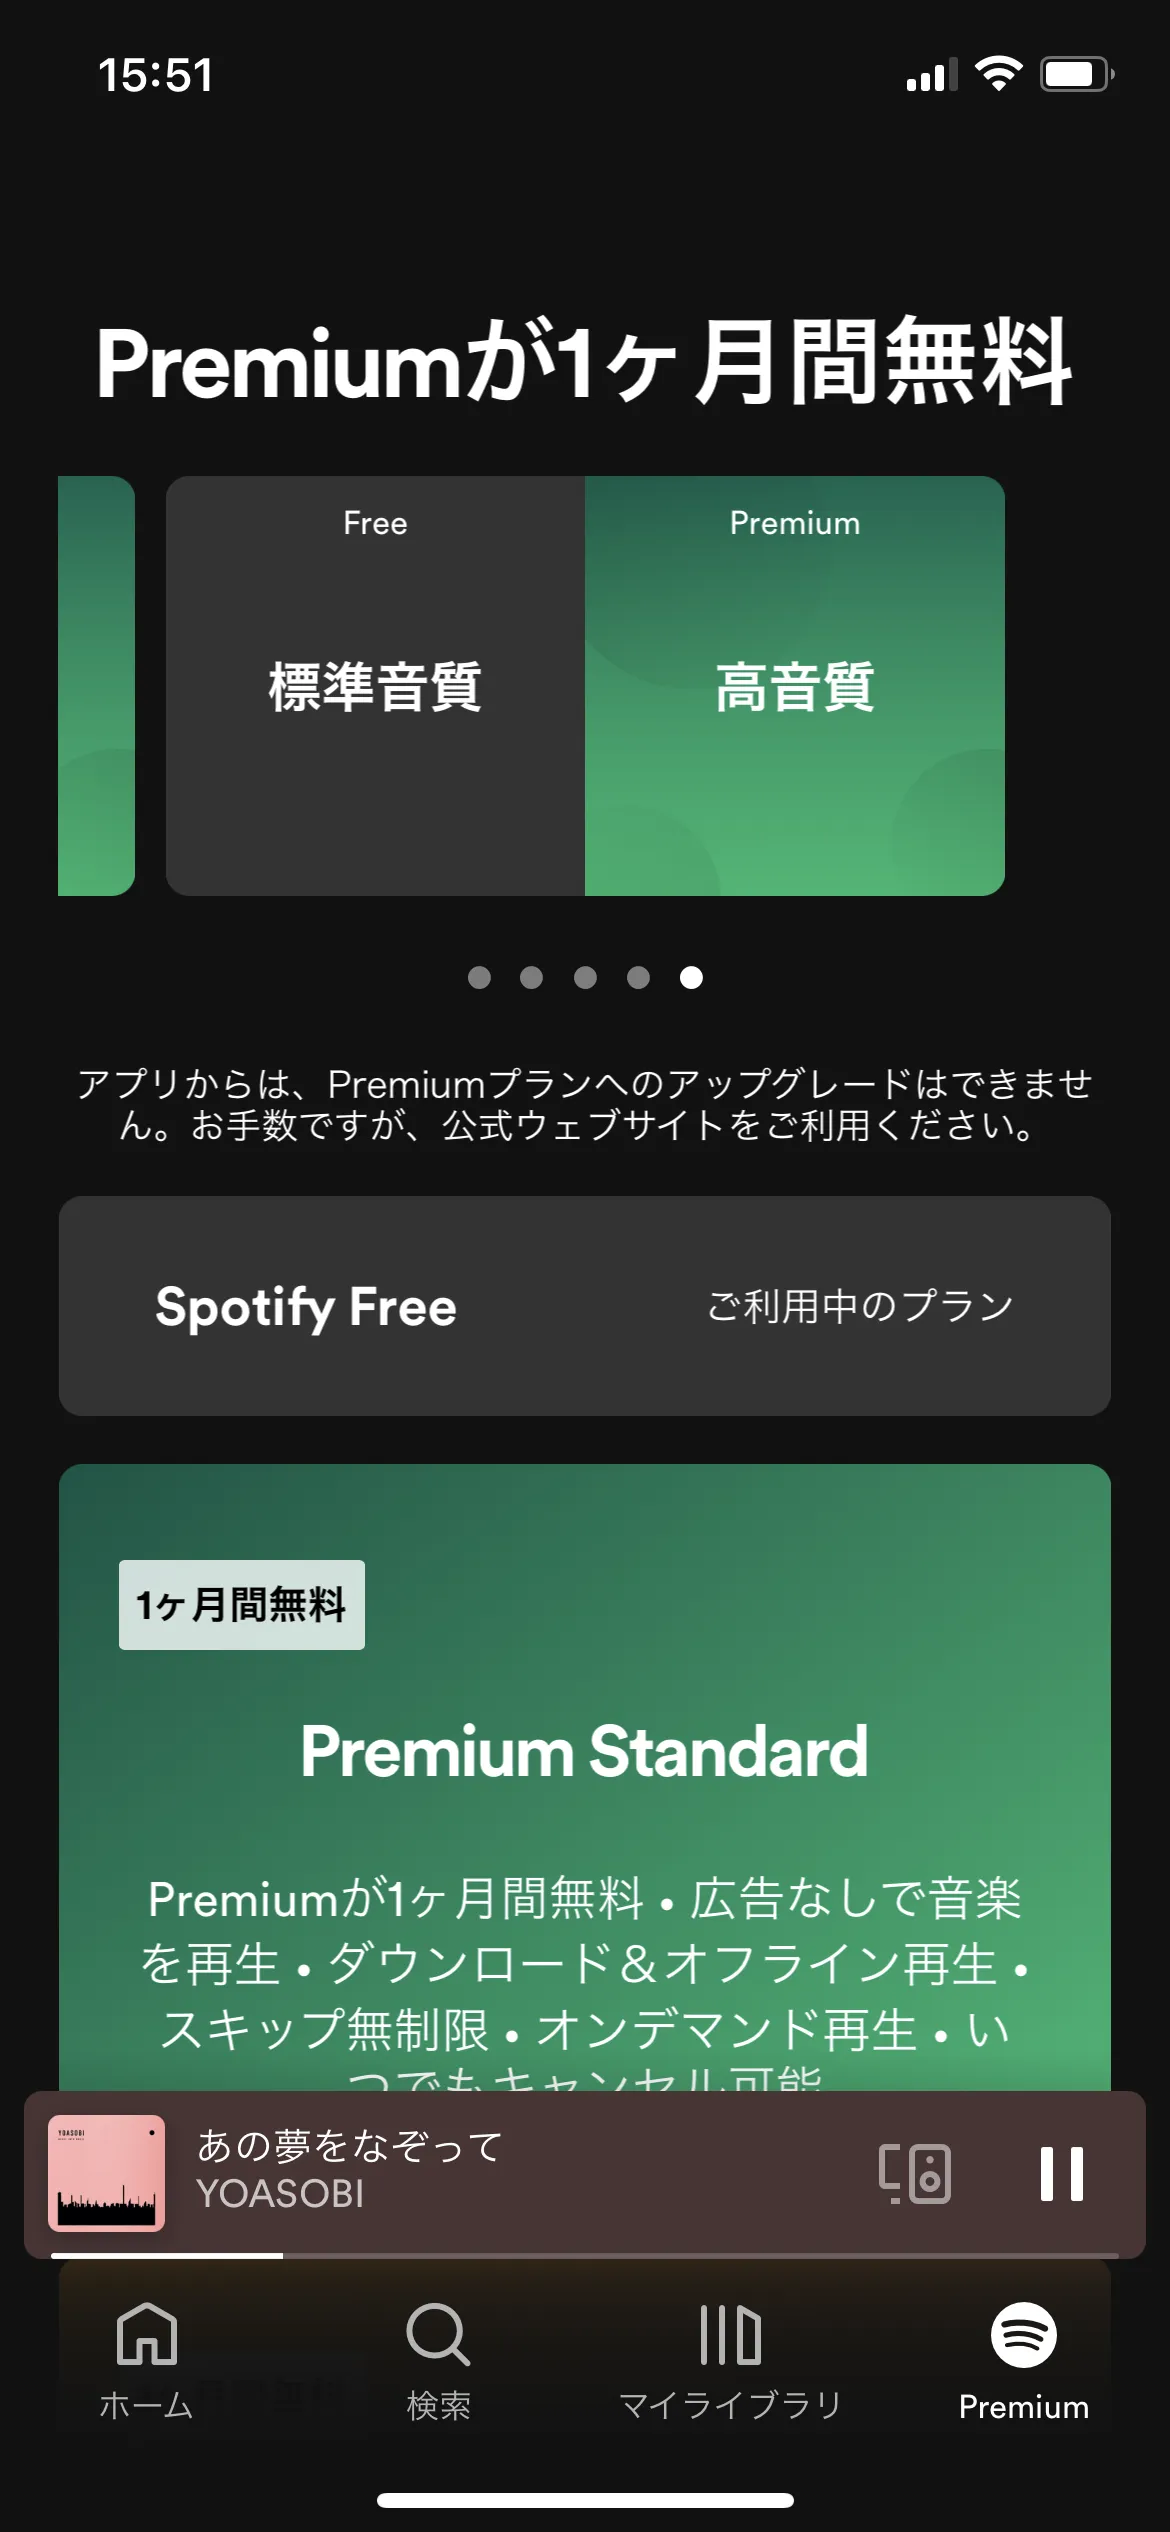 Spotify Premium screen